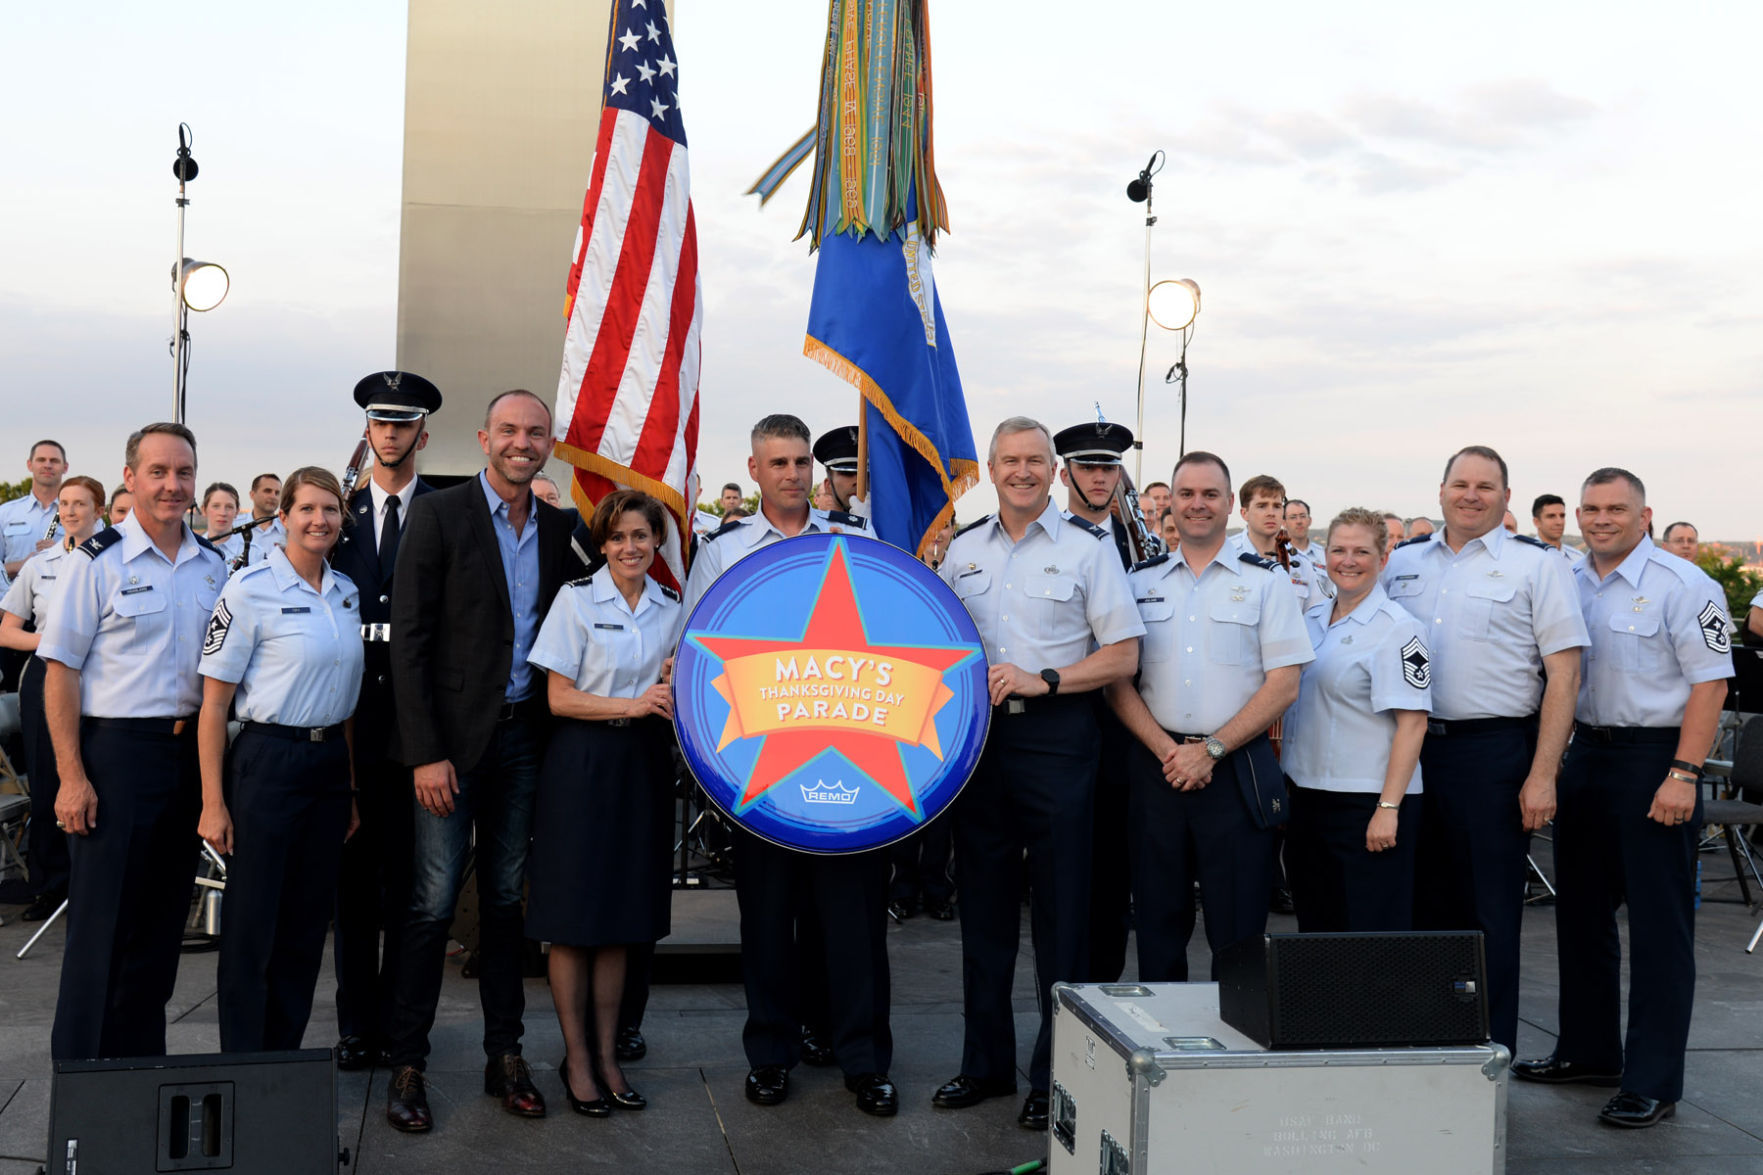 Air Force honor guard, band selected 